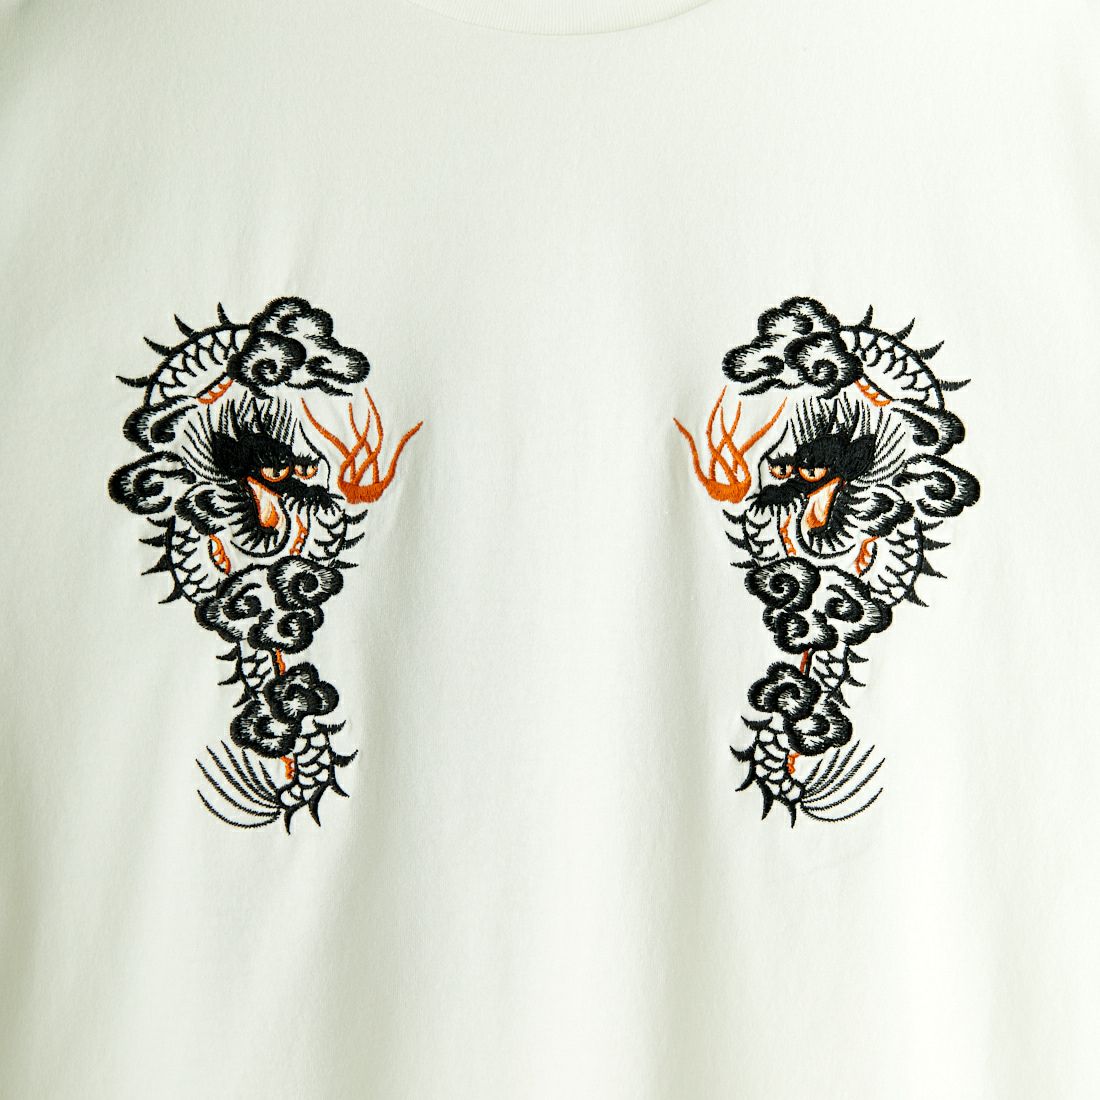 TAILOR TOYO [テーラートウヨウ] SUKA Tシャツ [TT79388] 101 WHITE